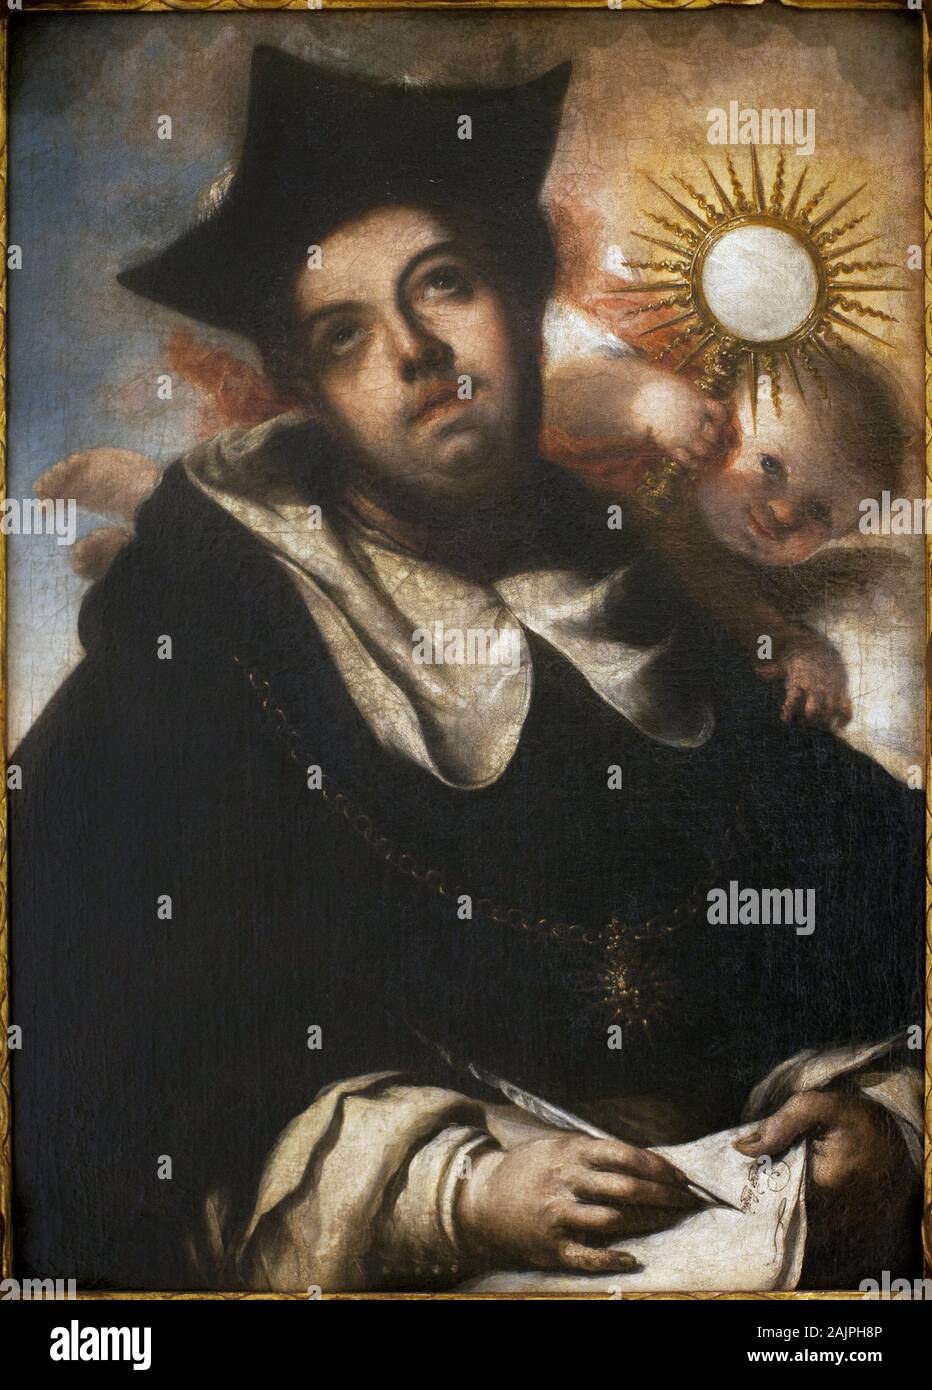 Saint Thomas d'Aquin (1124/1225-1274) - Peinture de Francisco de Herrera El Joven (1627-1685), huile sur toile, vers 1645 - Musee des Beaux Arts de Se Stock Photo